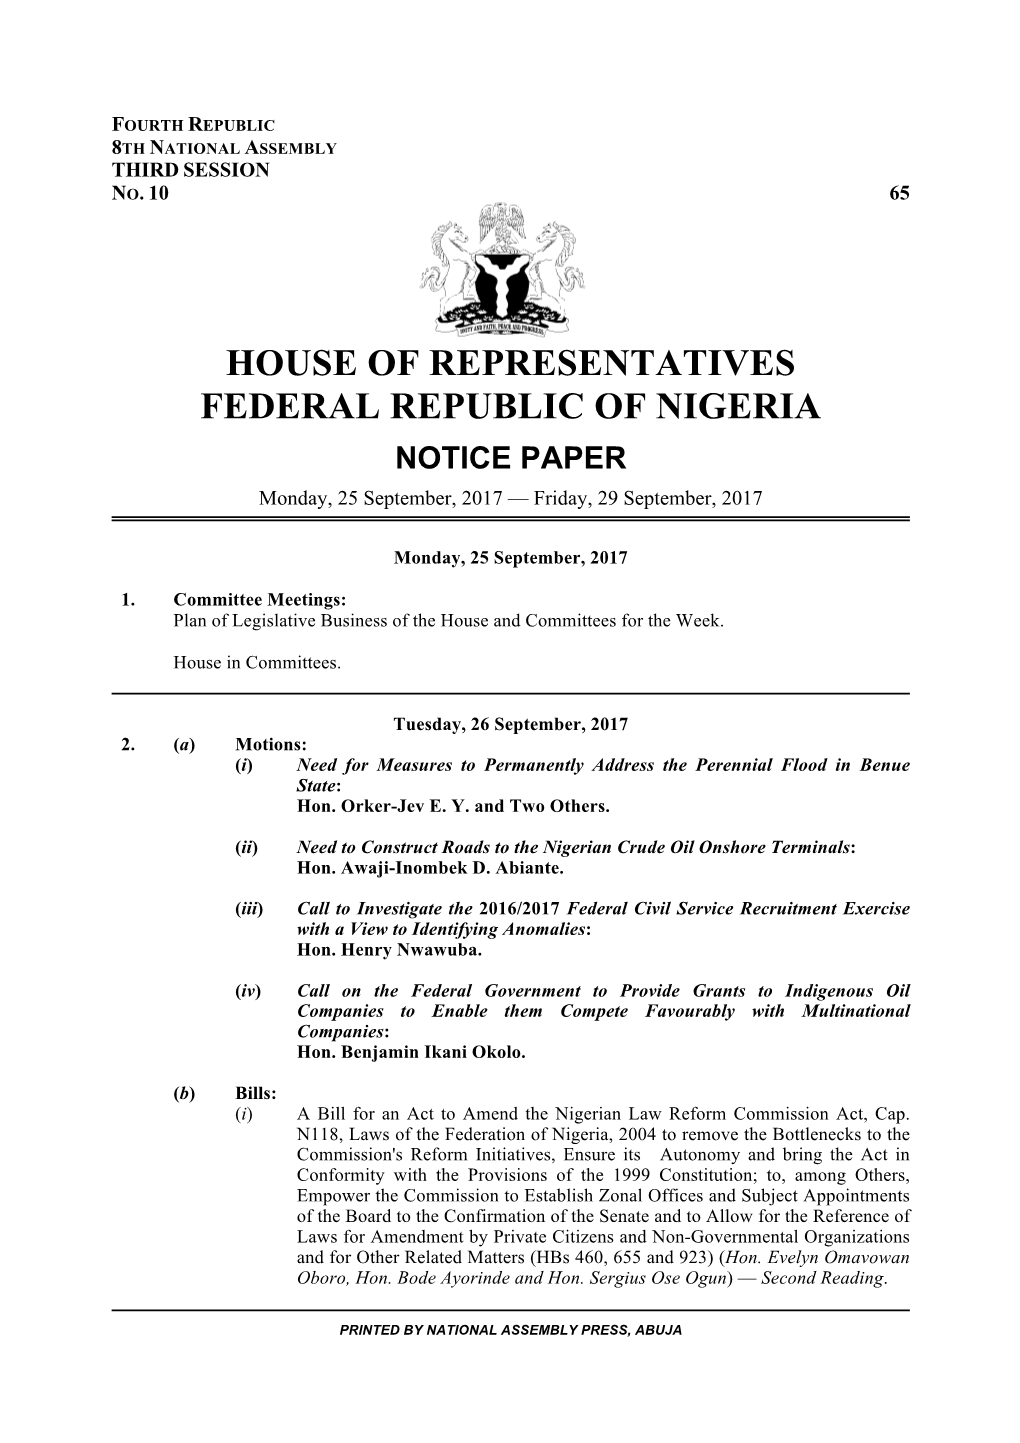 HOUSE of REPRESENTATIVES FEDERAL REPUBLIC of NIGERIA NOTICE PAPER Monday, 25 September, 2017 — Friday, 29 September, 2017